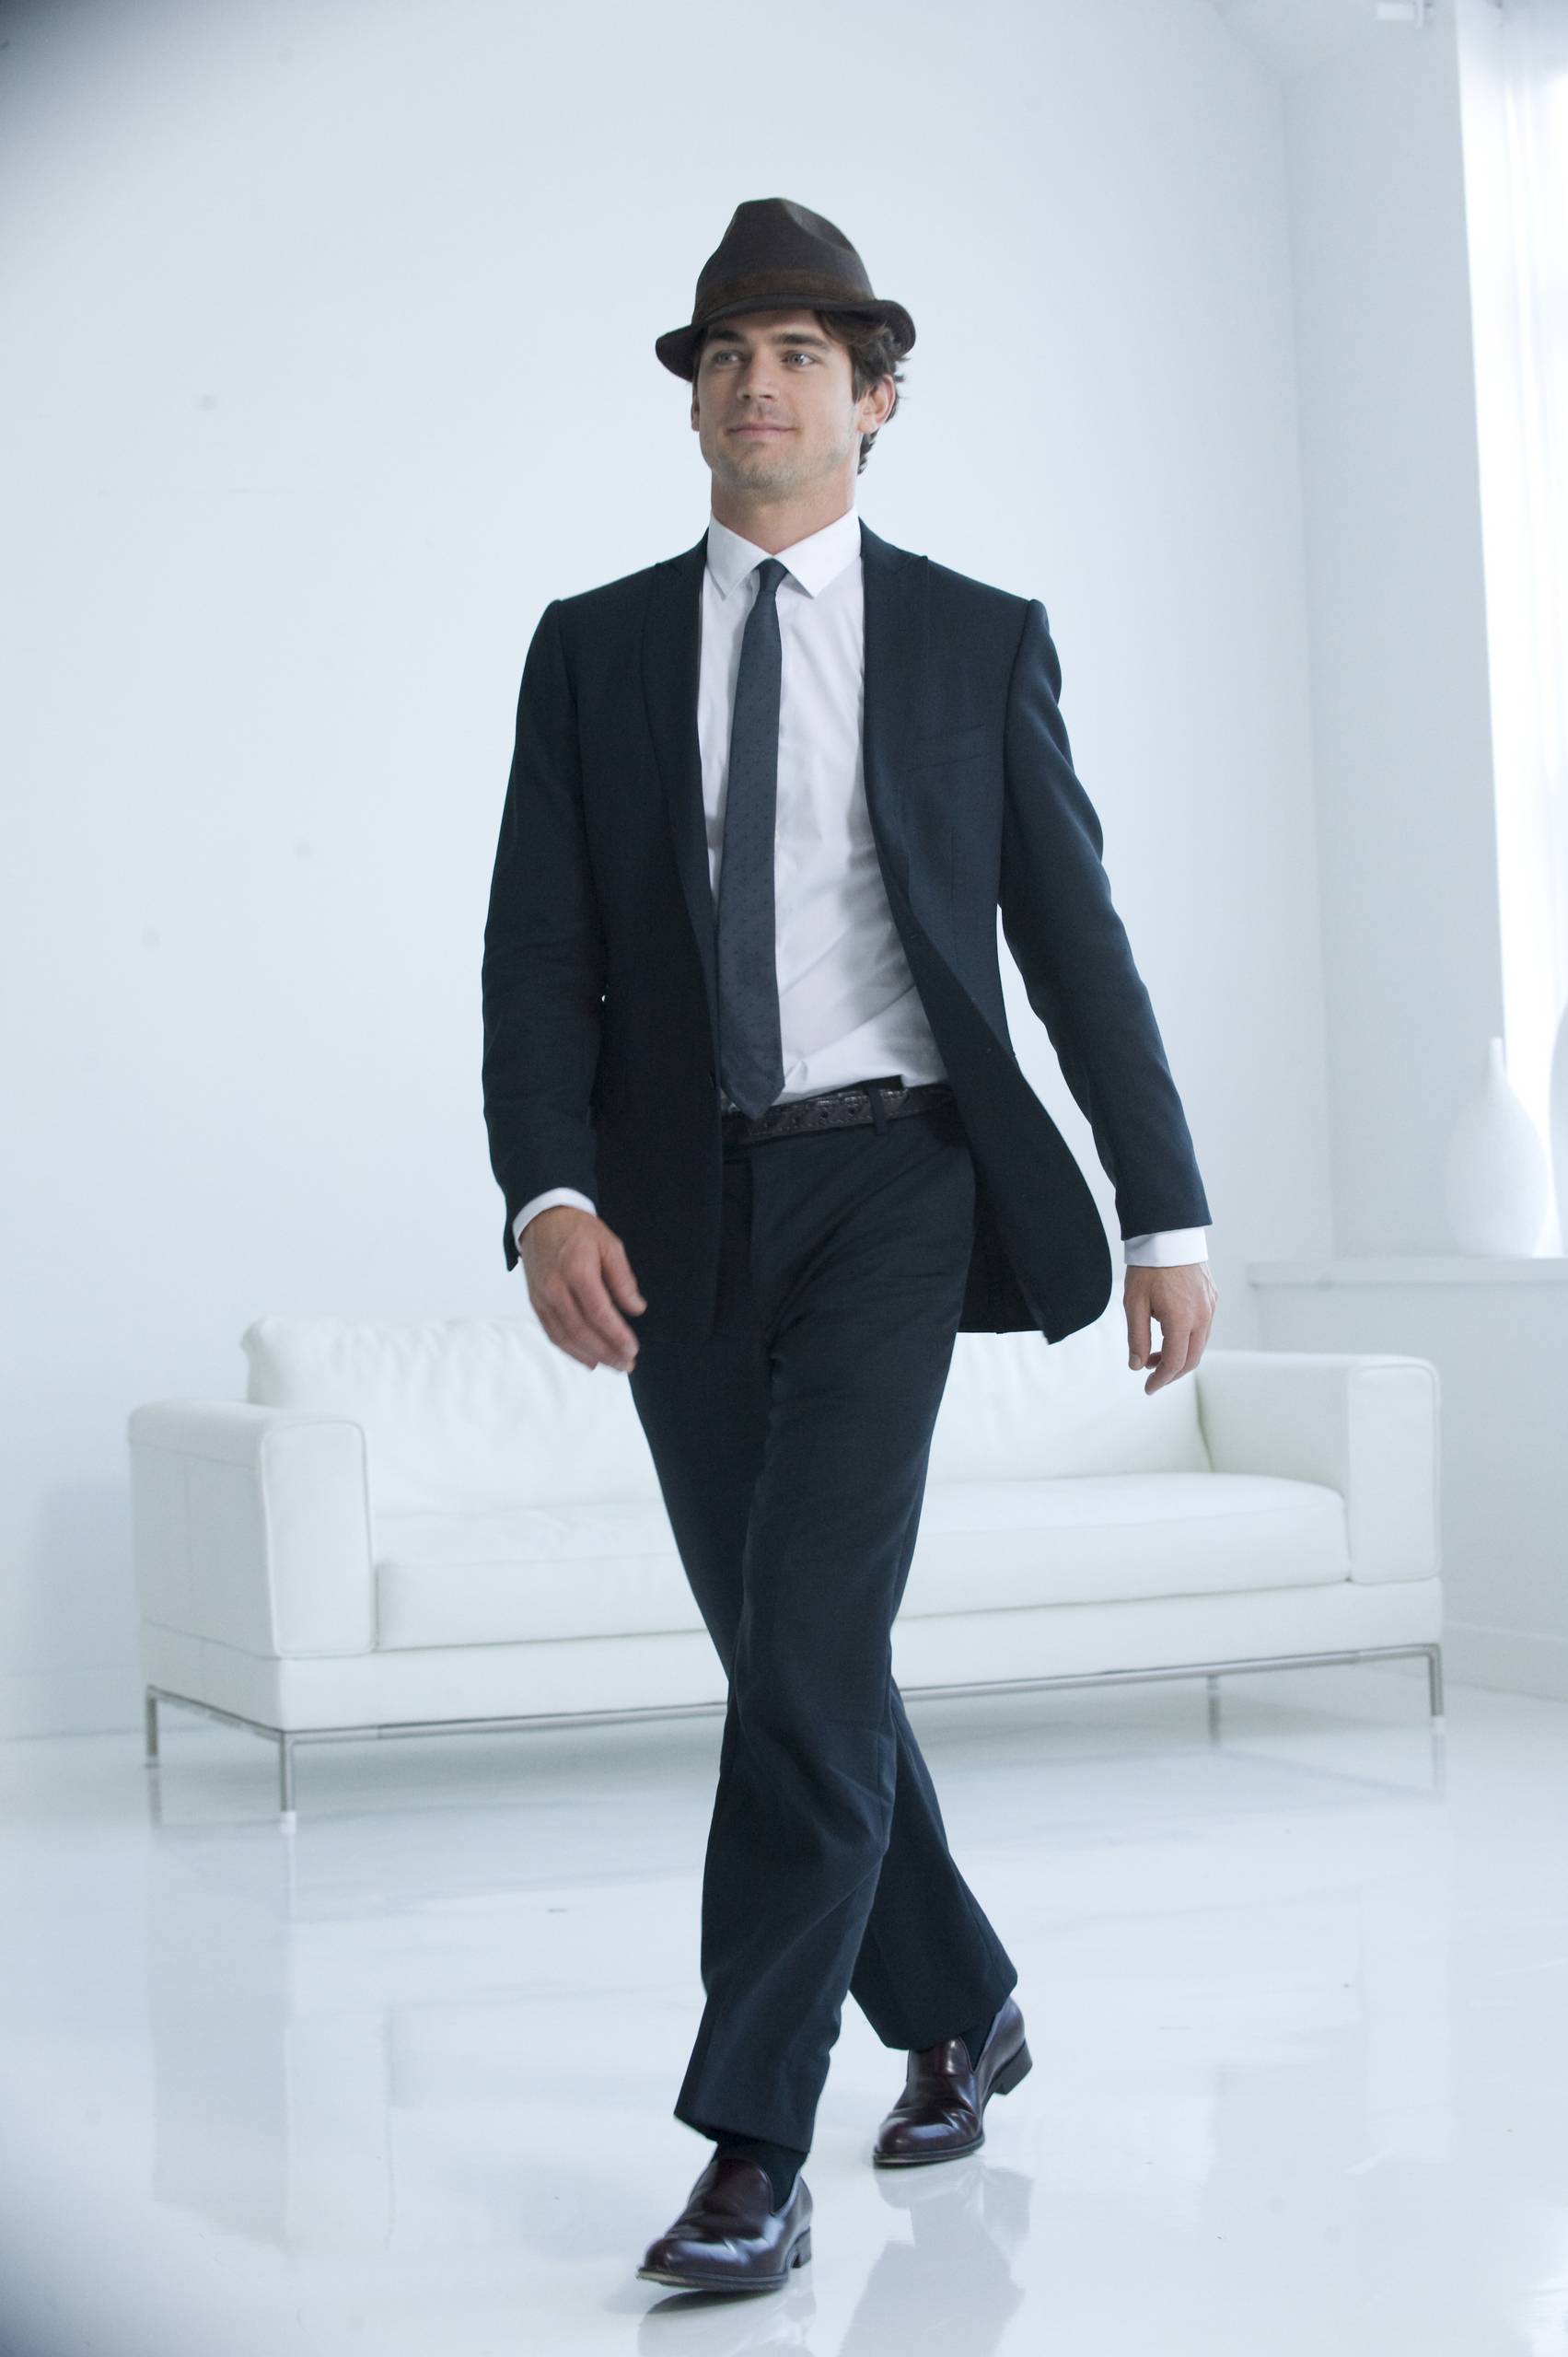 Wallpaper neal caffrey, white collar, white collar, Neal Caffrey